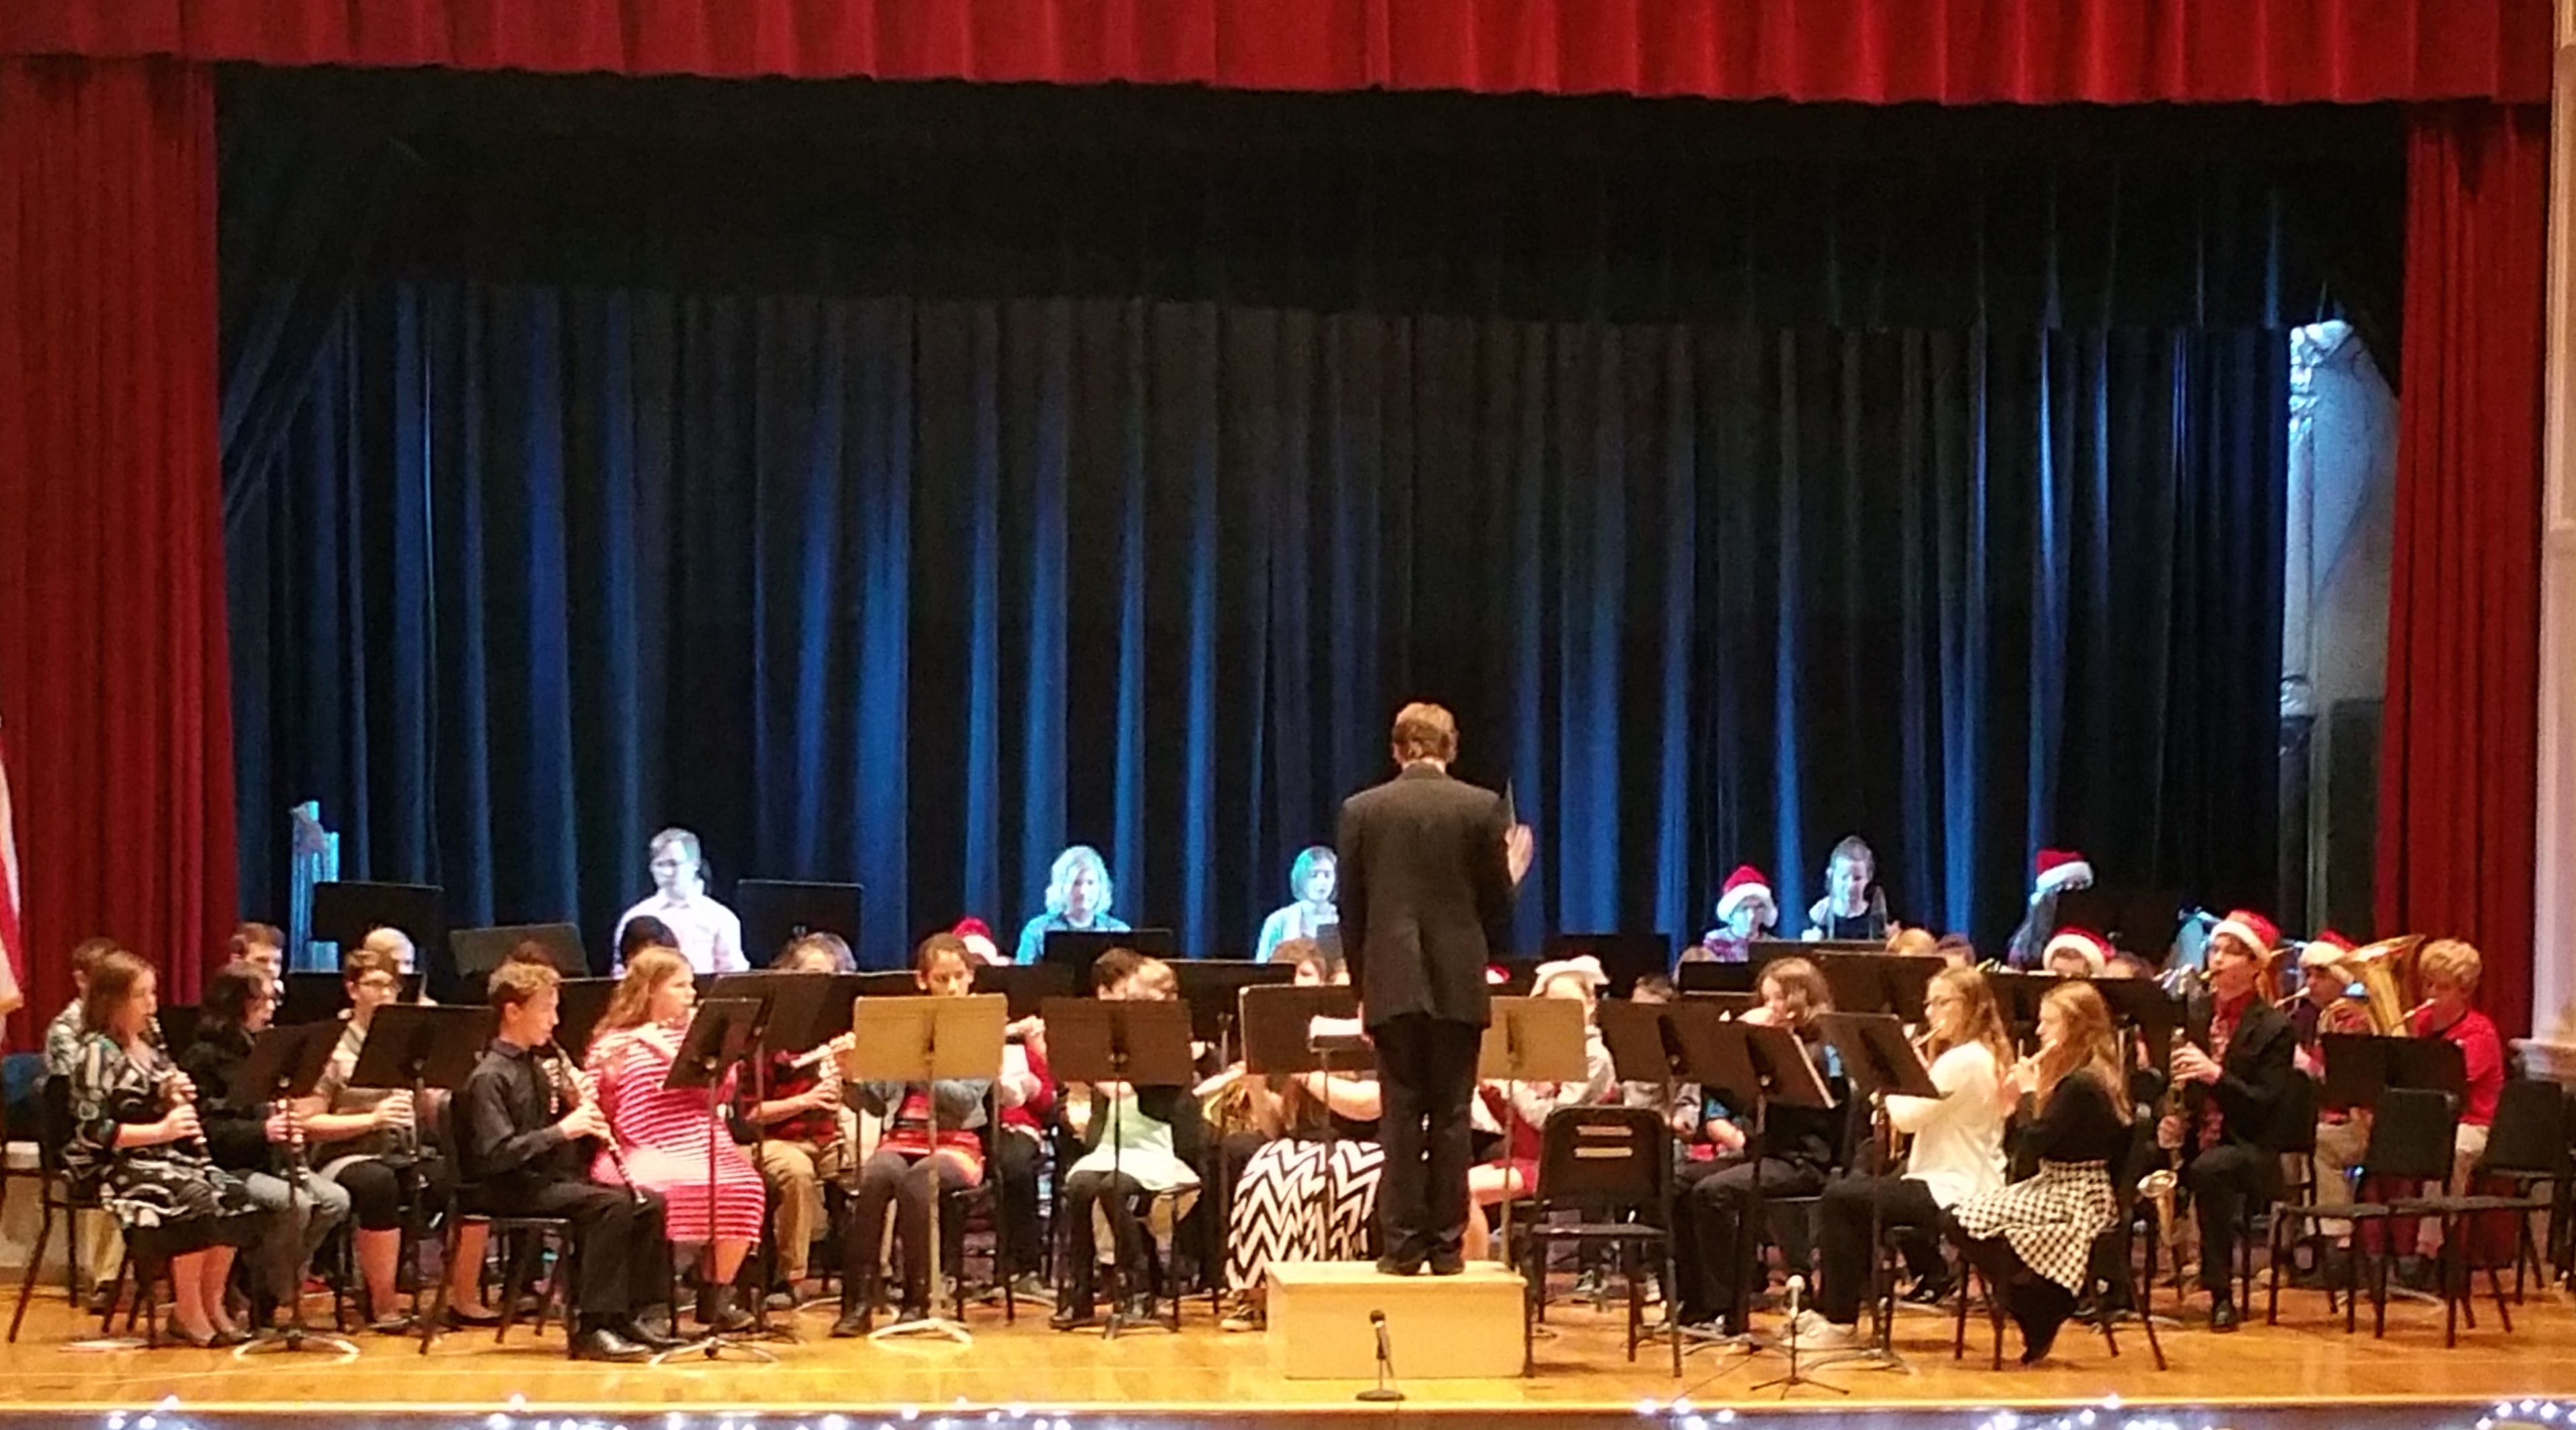 Gresham Middle School Band Concert, Dec 15, 2016